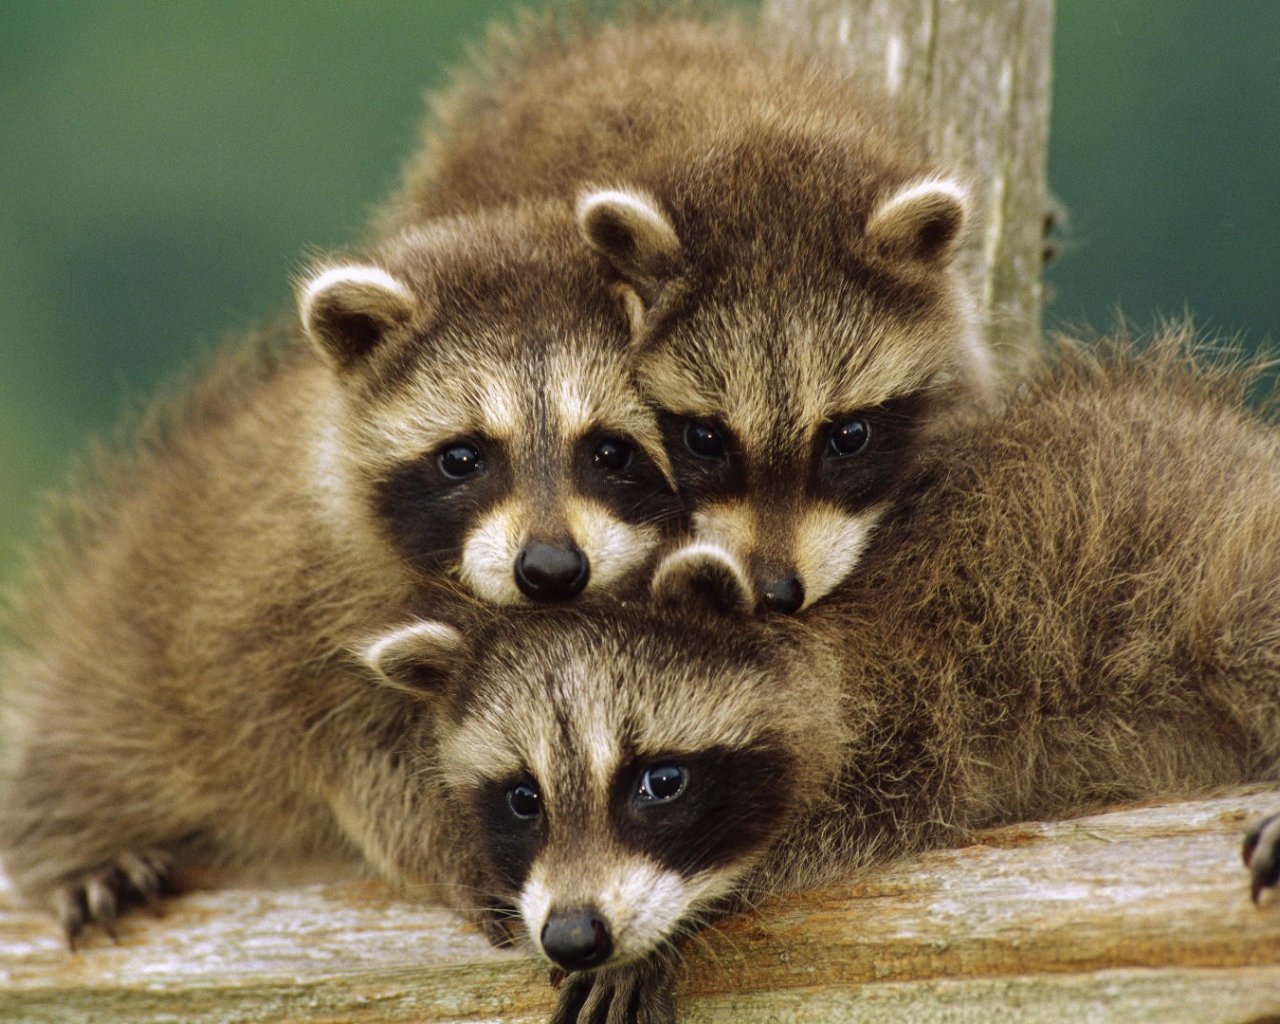 Three little raccoon